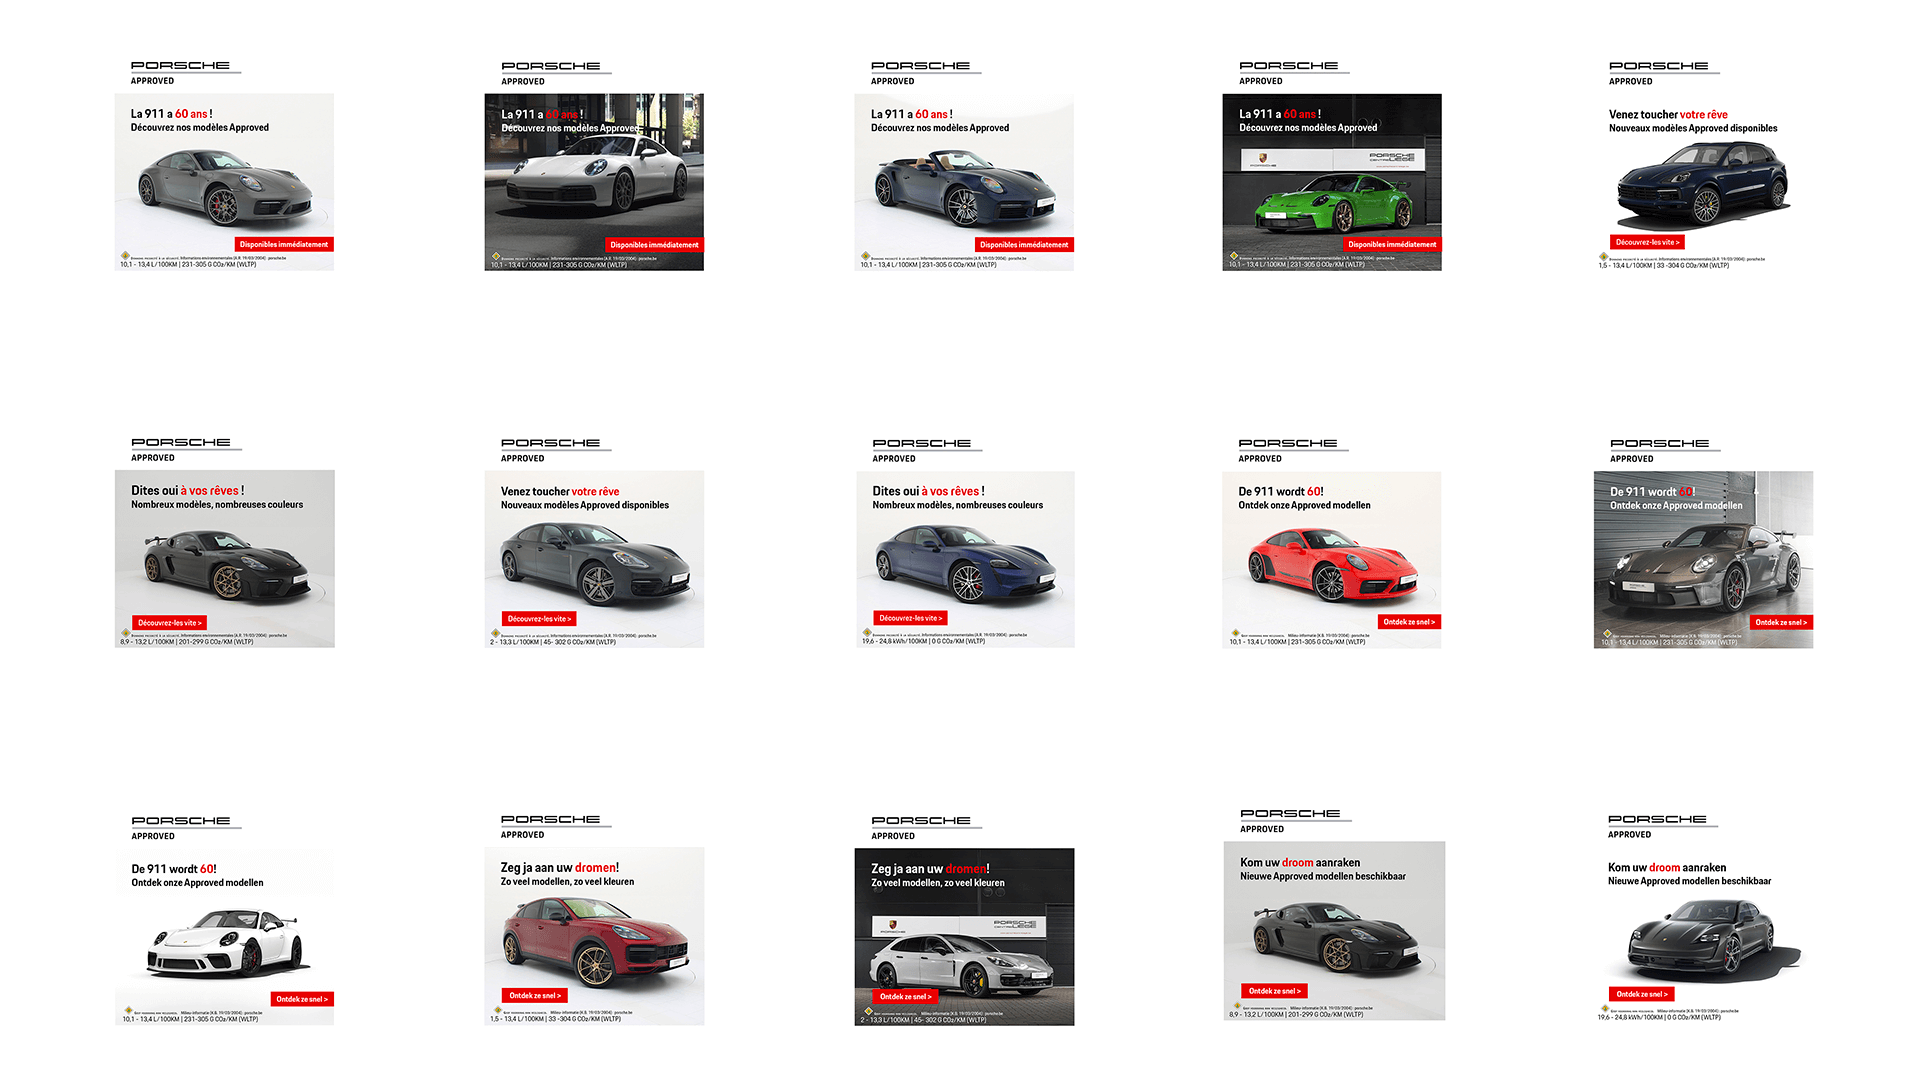 Porsche Approved Campaign